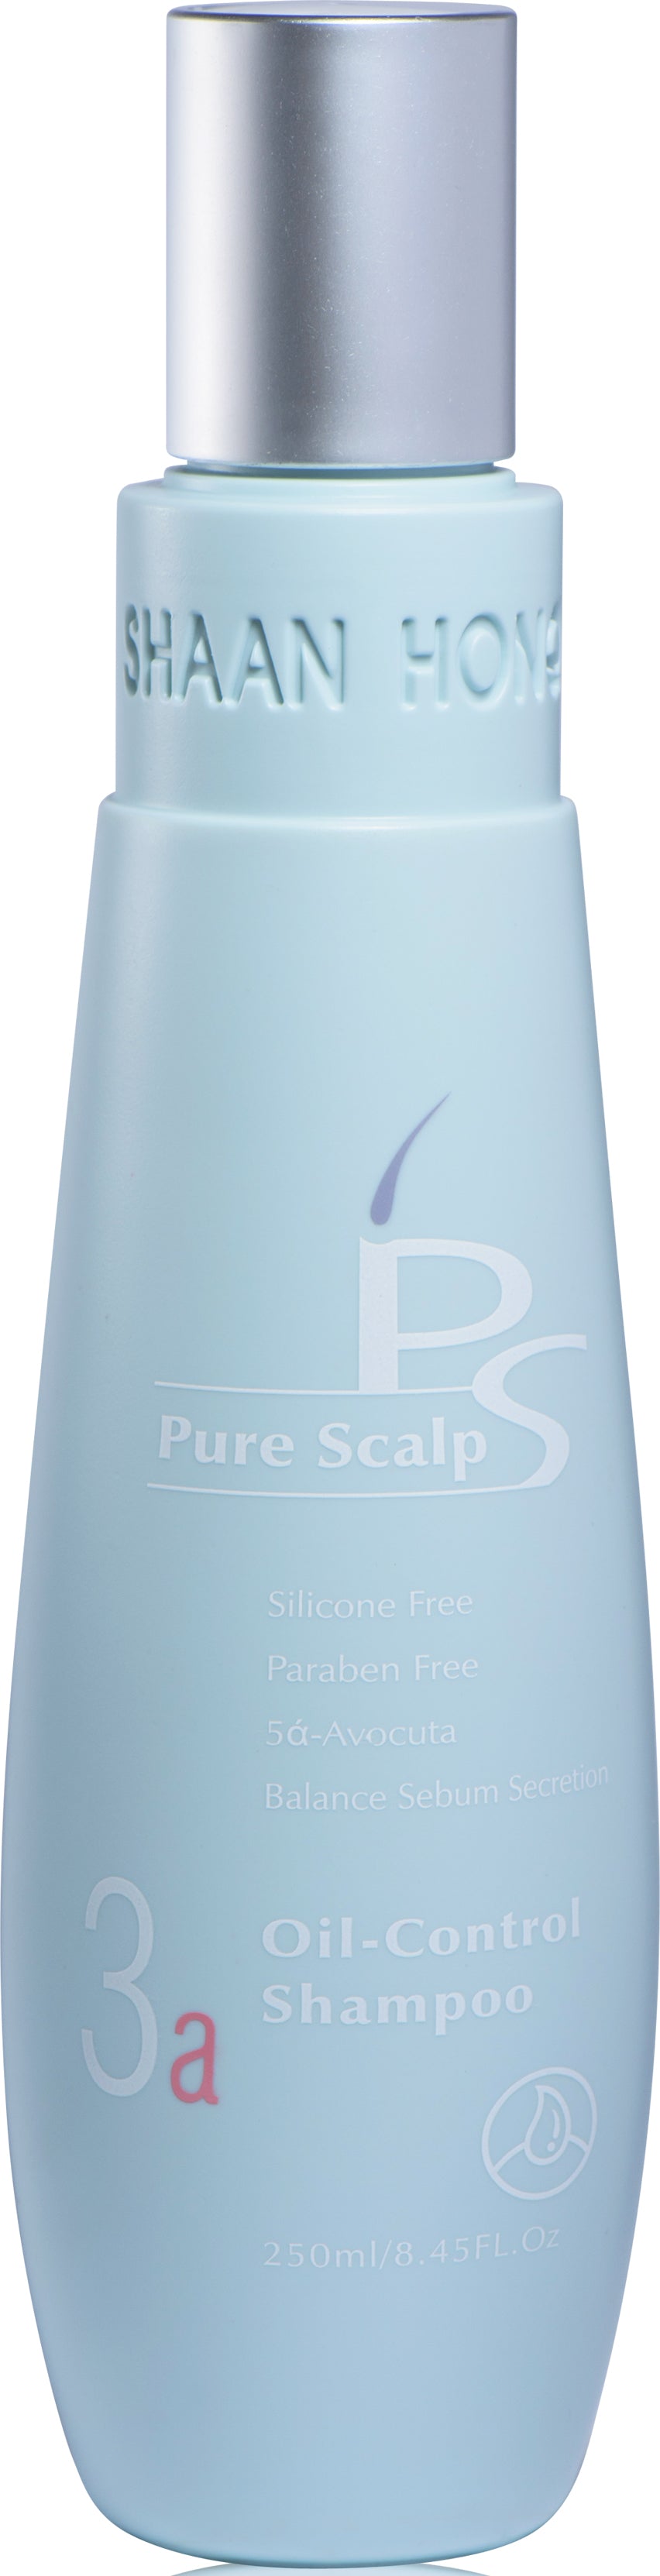 Pure Scalp (3a) Oil-Control Shampoo 250ML